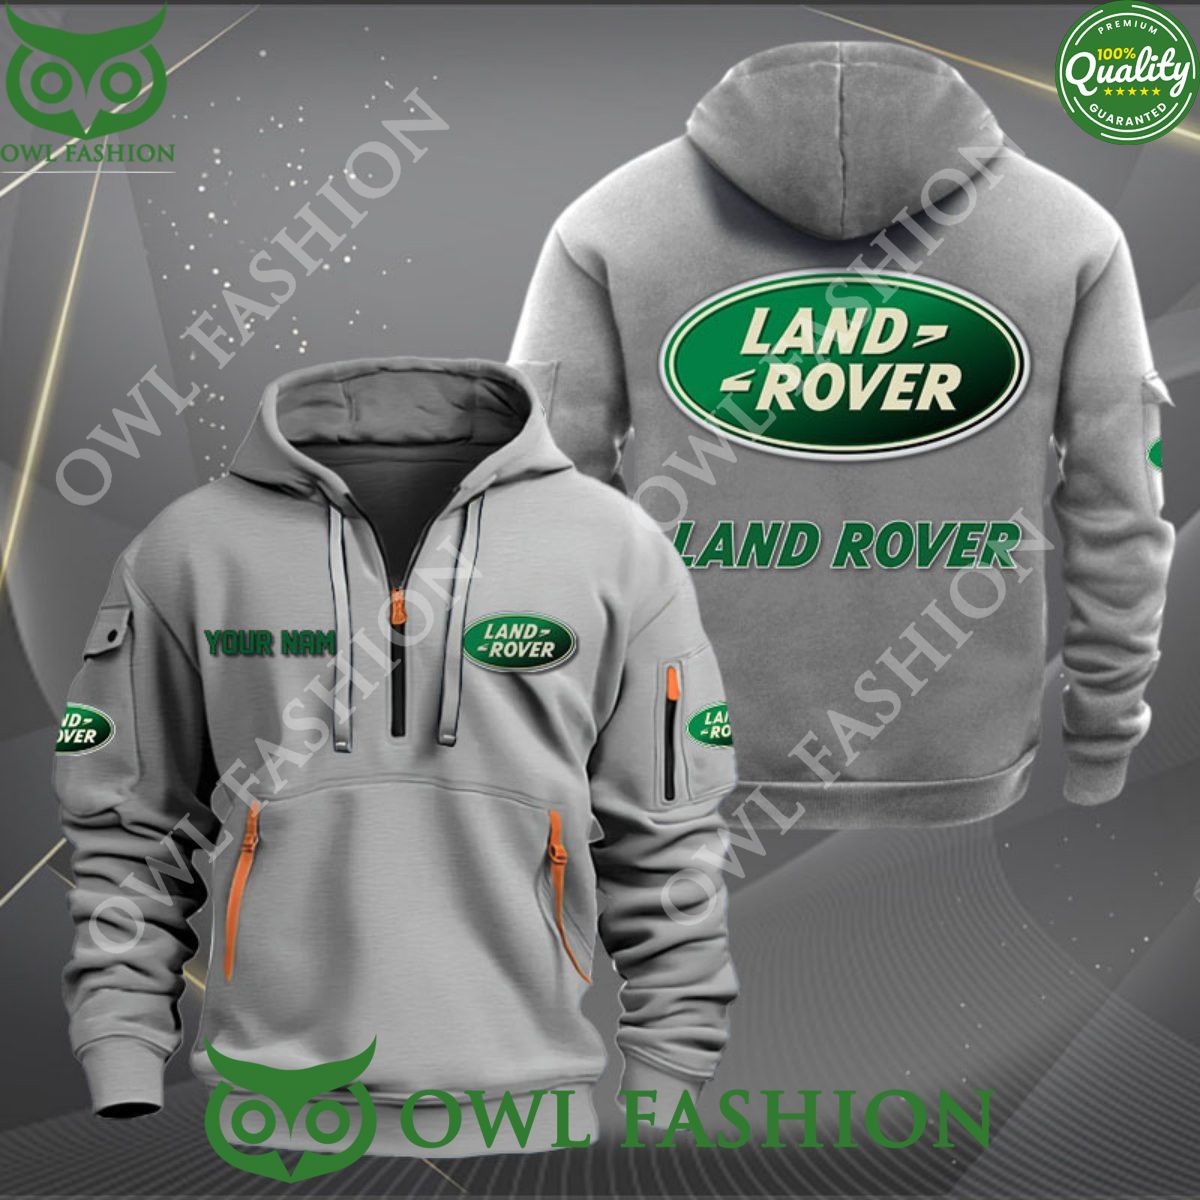 land rover british brand drive personalized 2d half zipper hoodie 1 c2Ans.jpg